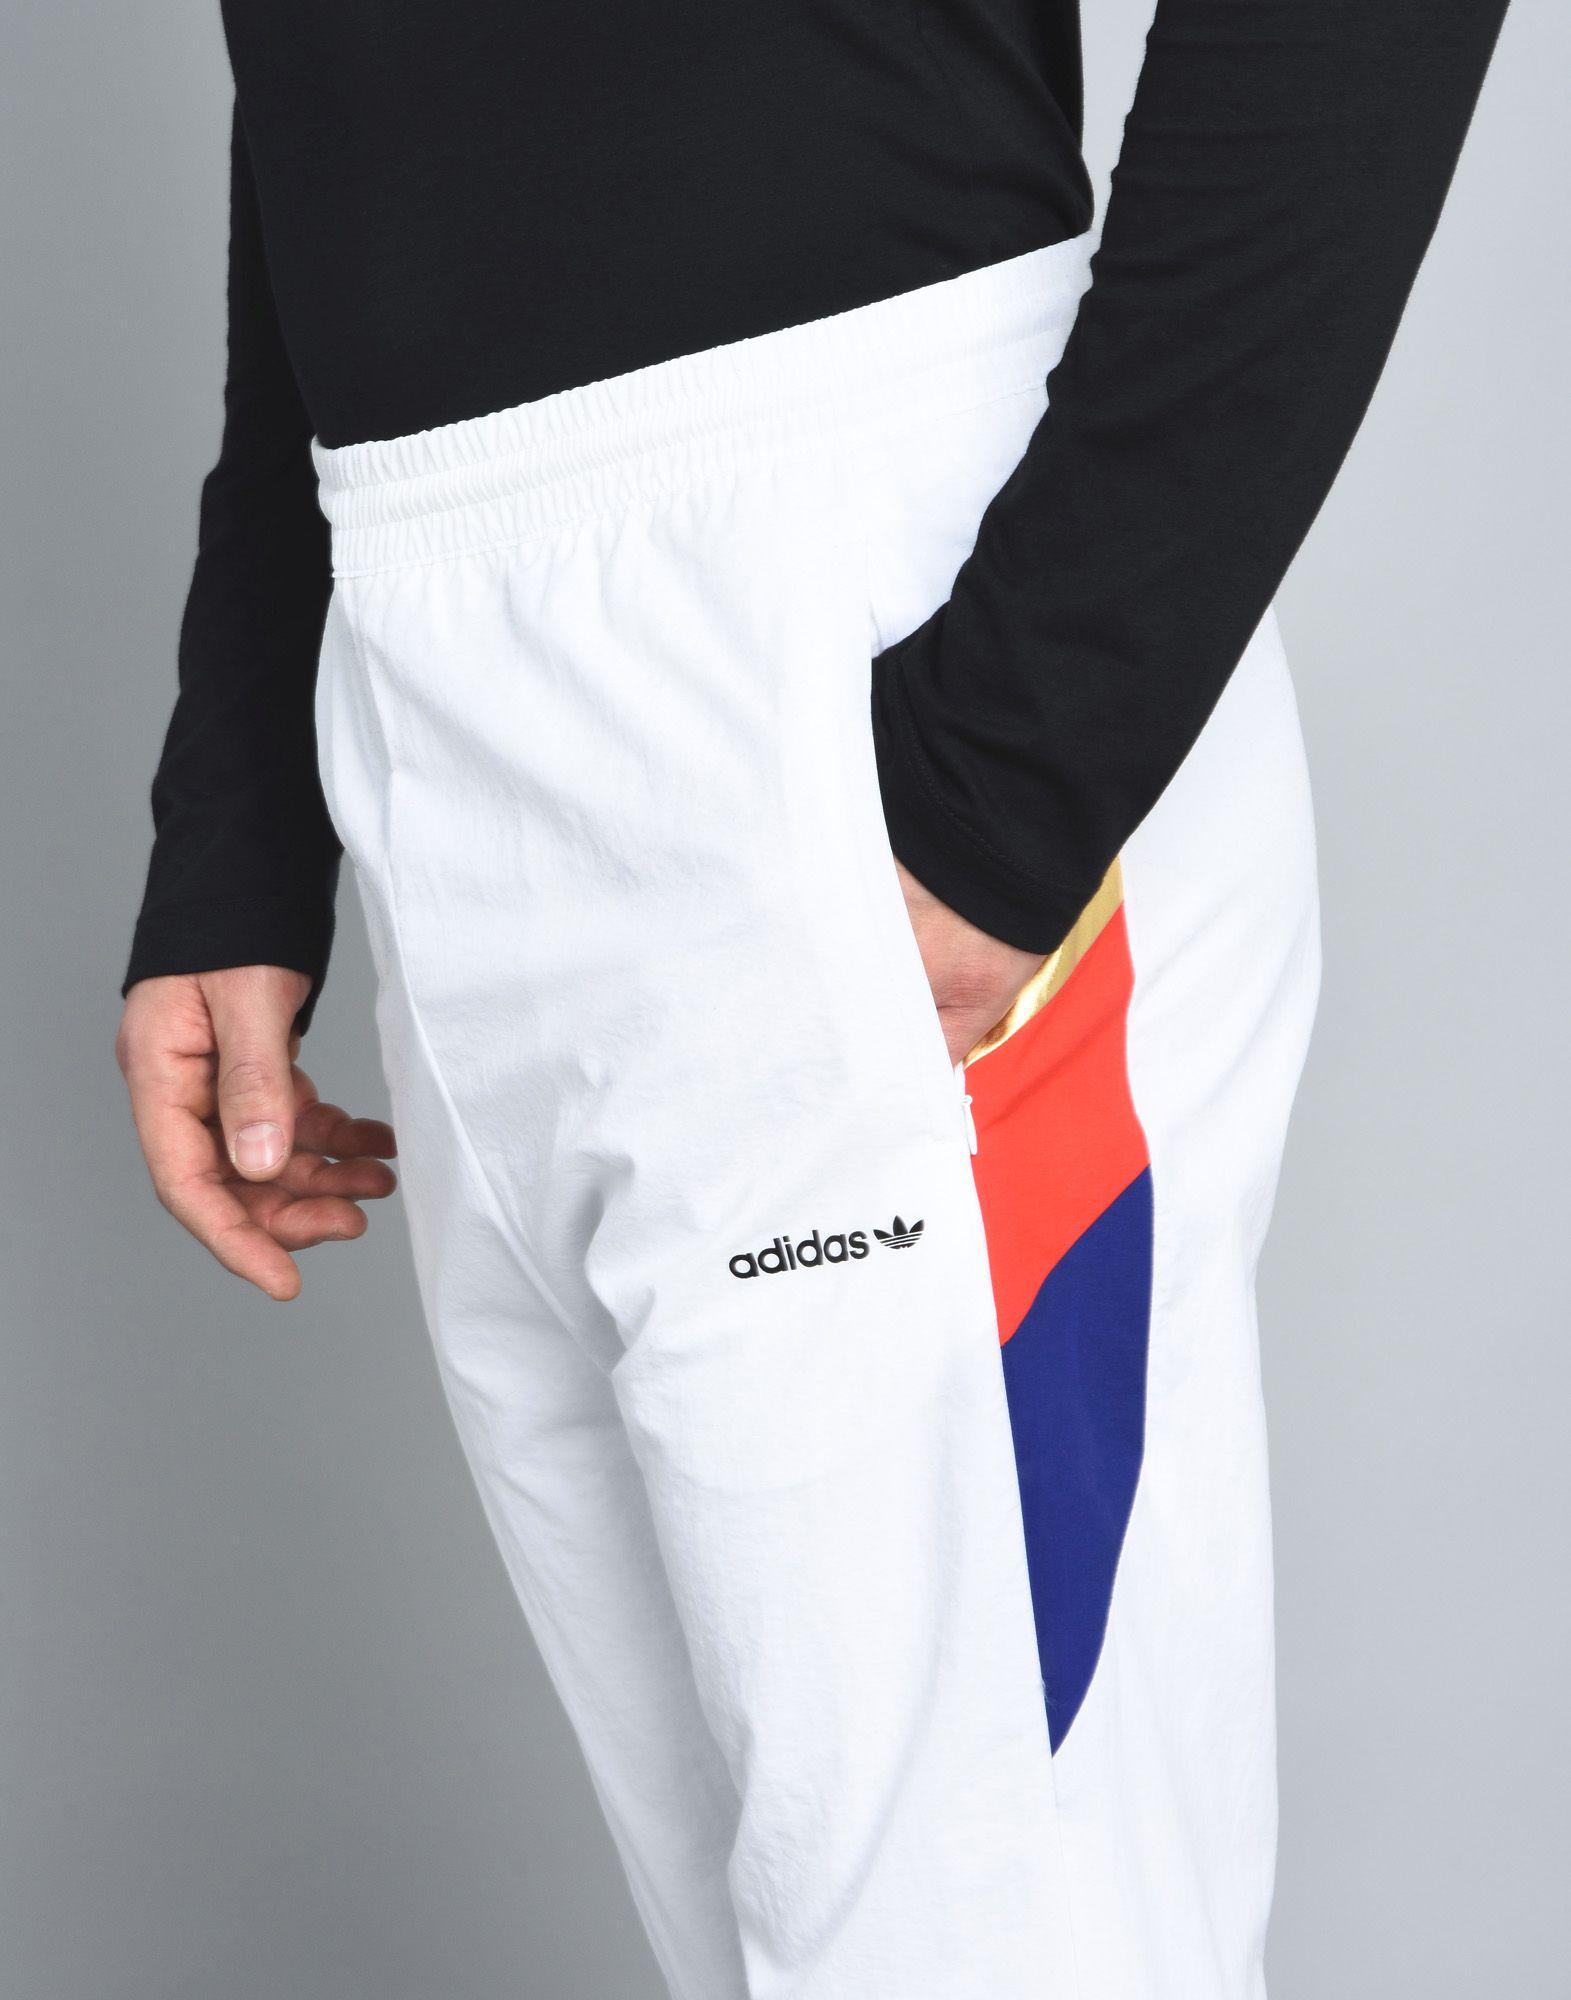 adidas Originals Casual Trouser in White for Men - Lyst